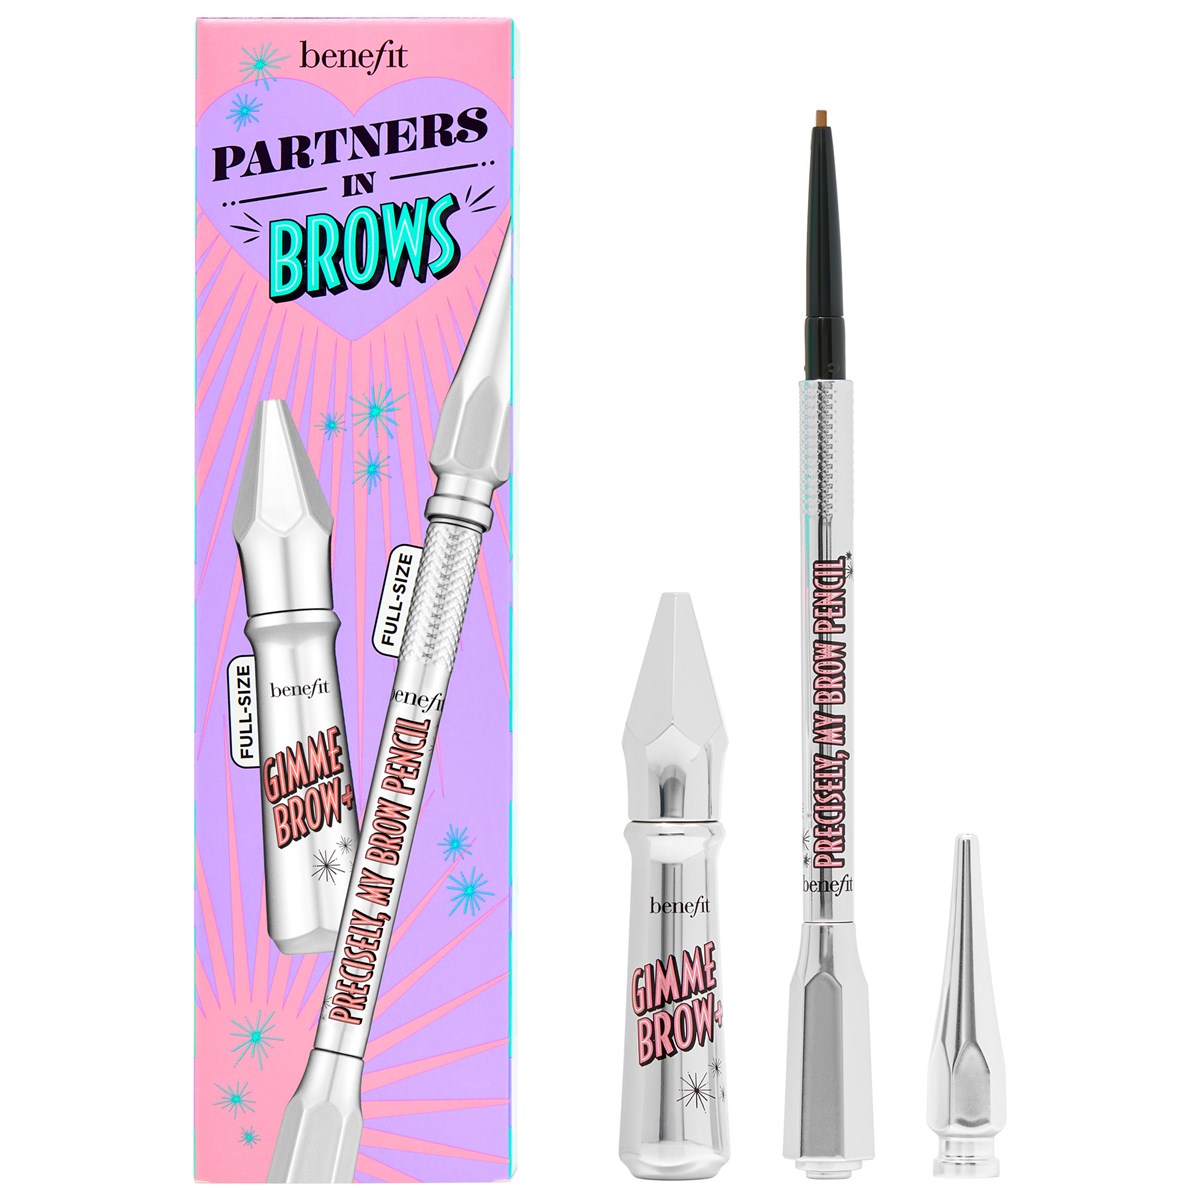 Benefit - Partners in Brows brow pencil & gel value set